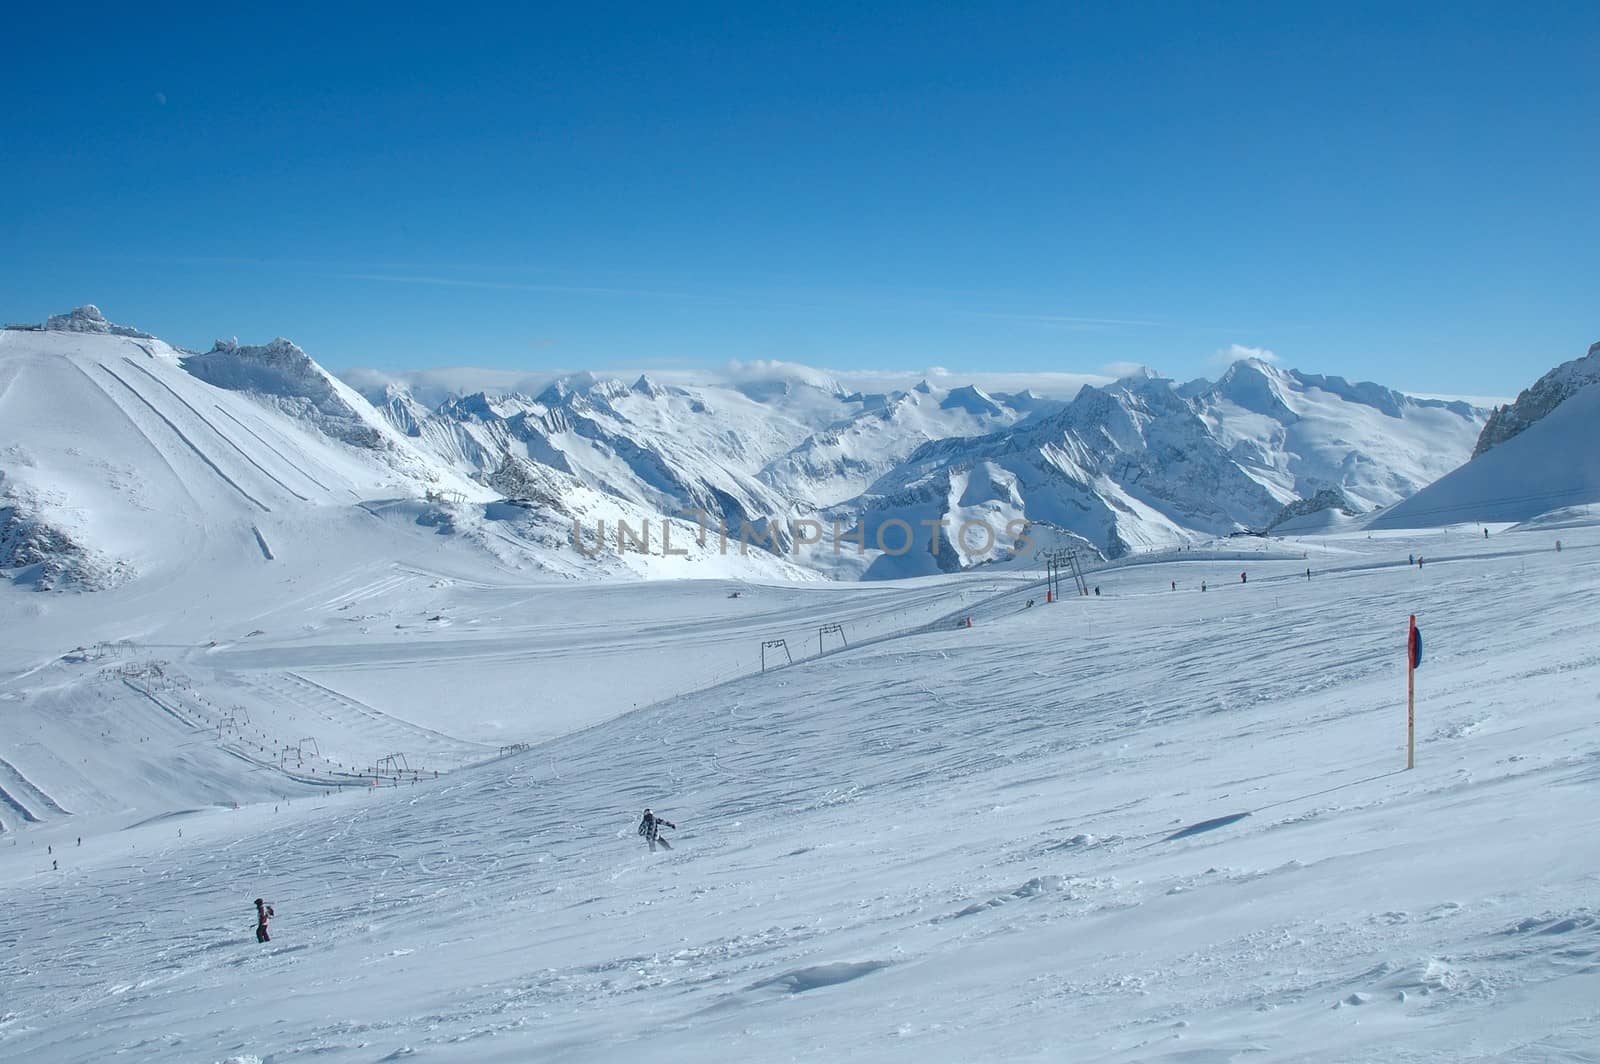 Ski slopes on Hintertux glacier in Alps nearby Zillertal valley in Austria